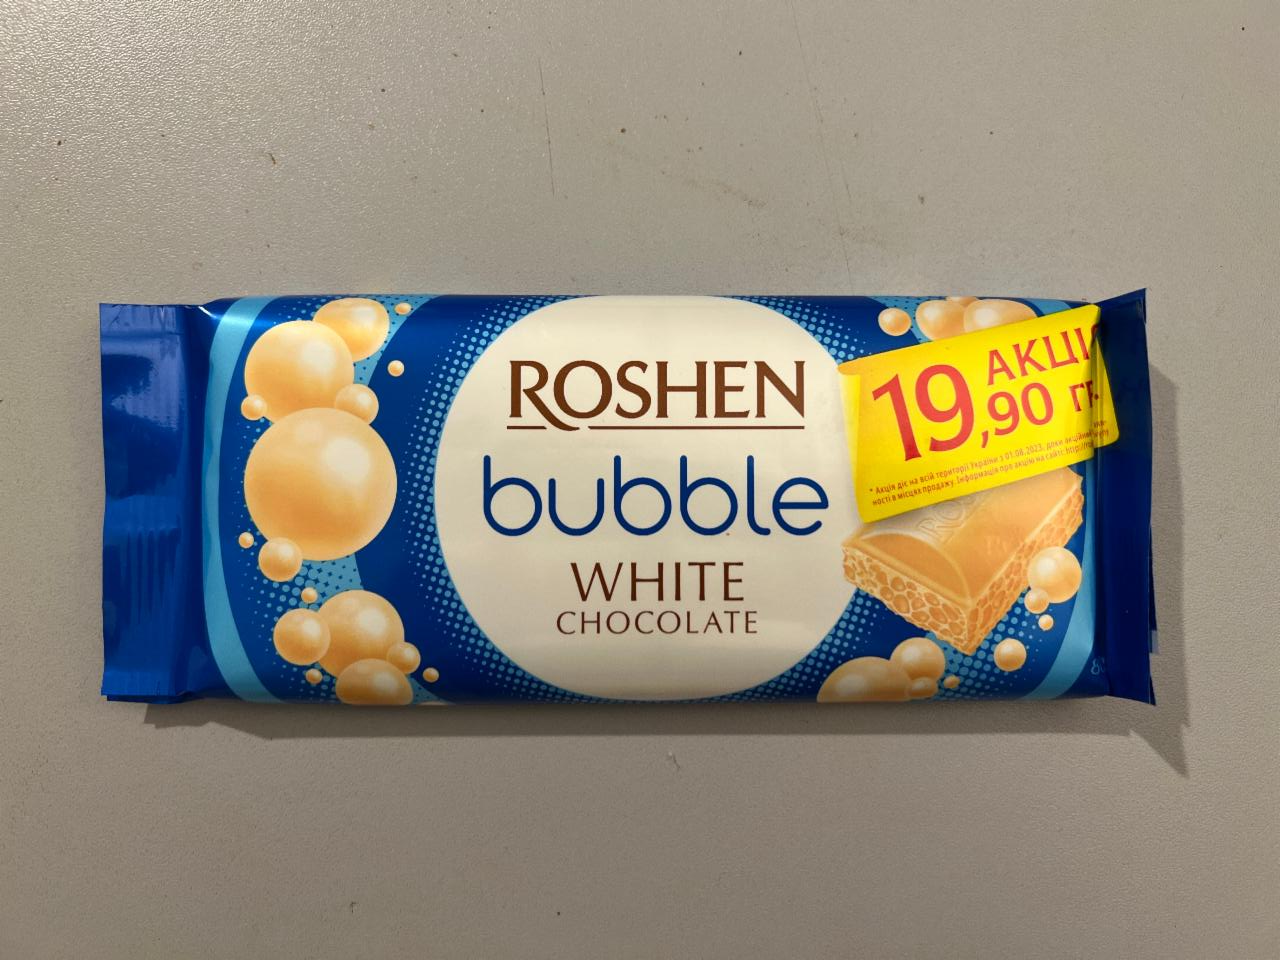 Zdjęcia - White bubble chocolate Roshen